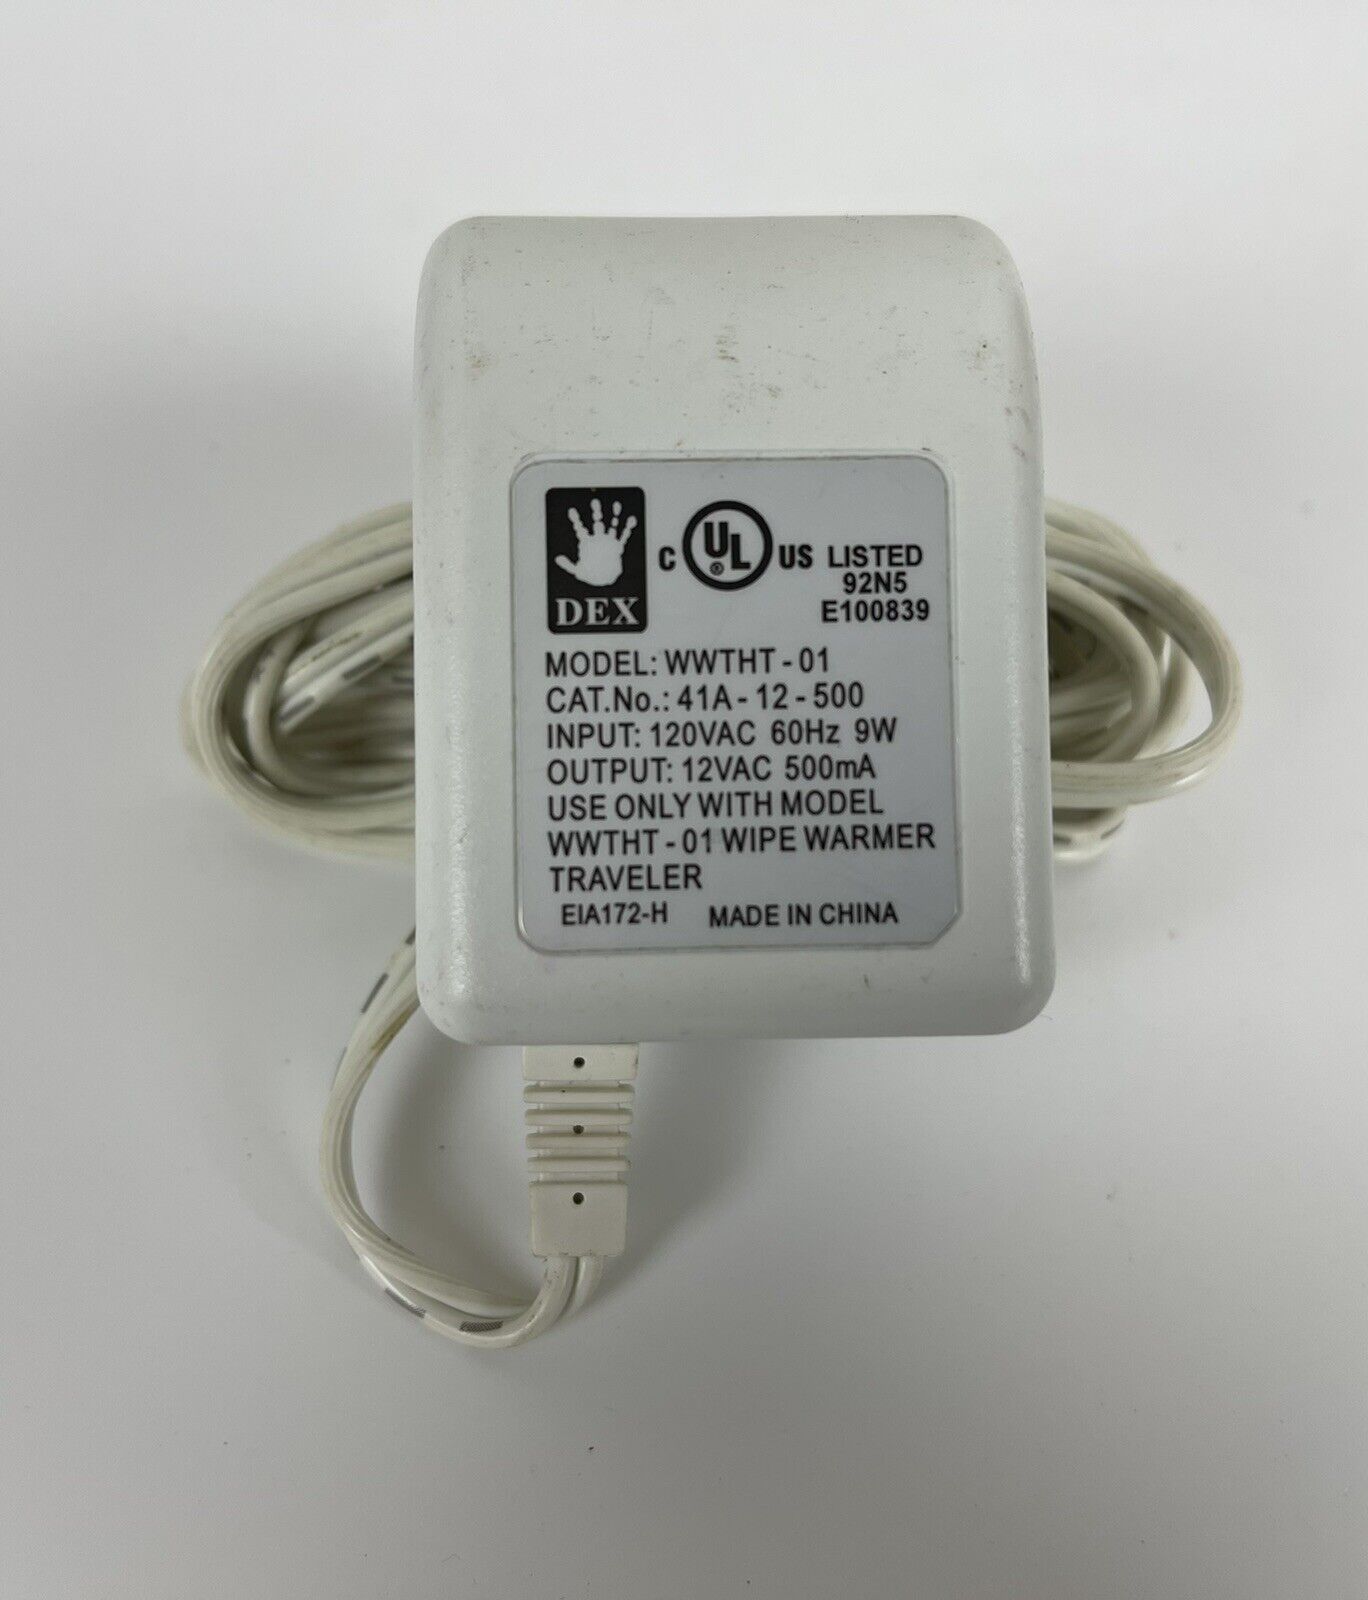 *Brand NEW*for Dexbaby Travel Wipe Warmer WWTHT-01 12VAC Original Power Supply AC Adapter